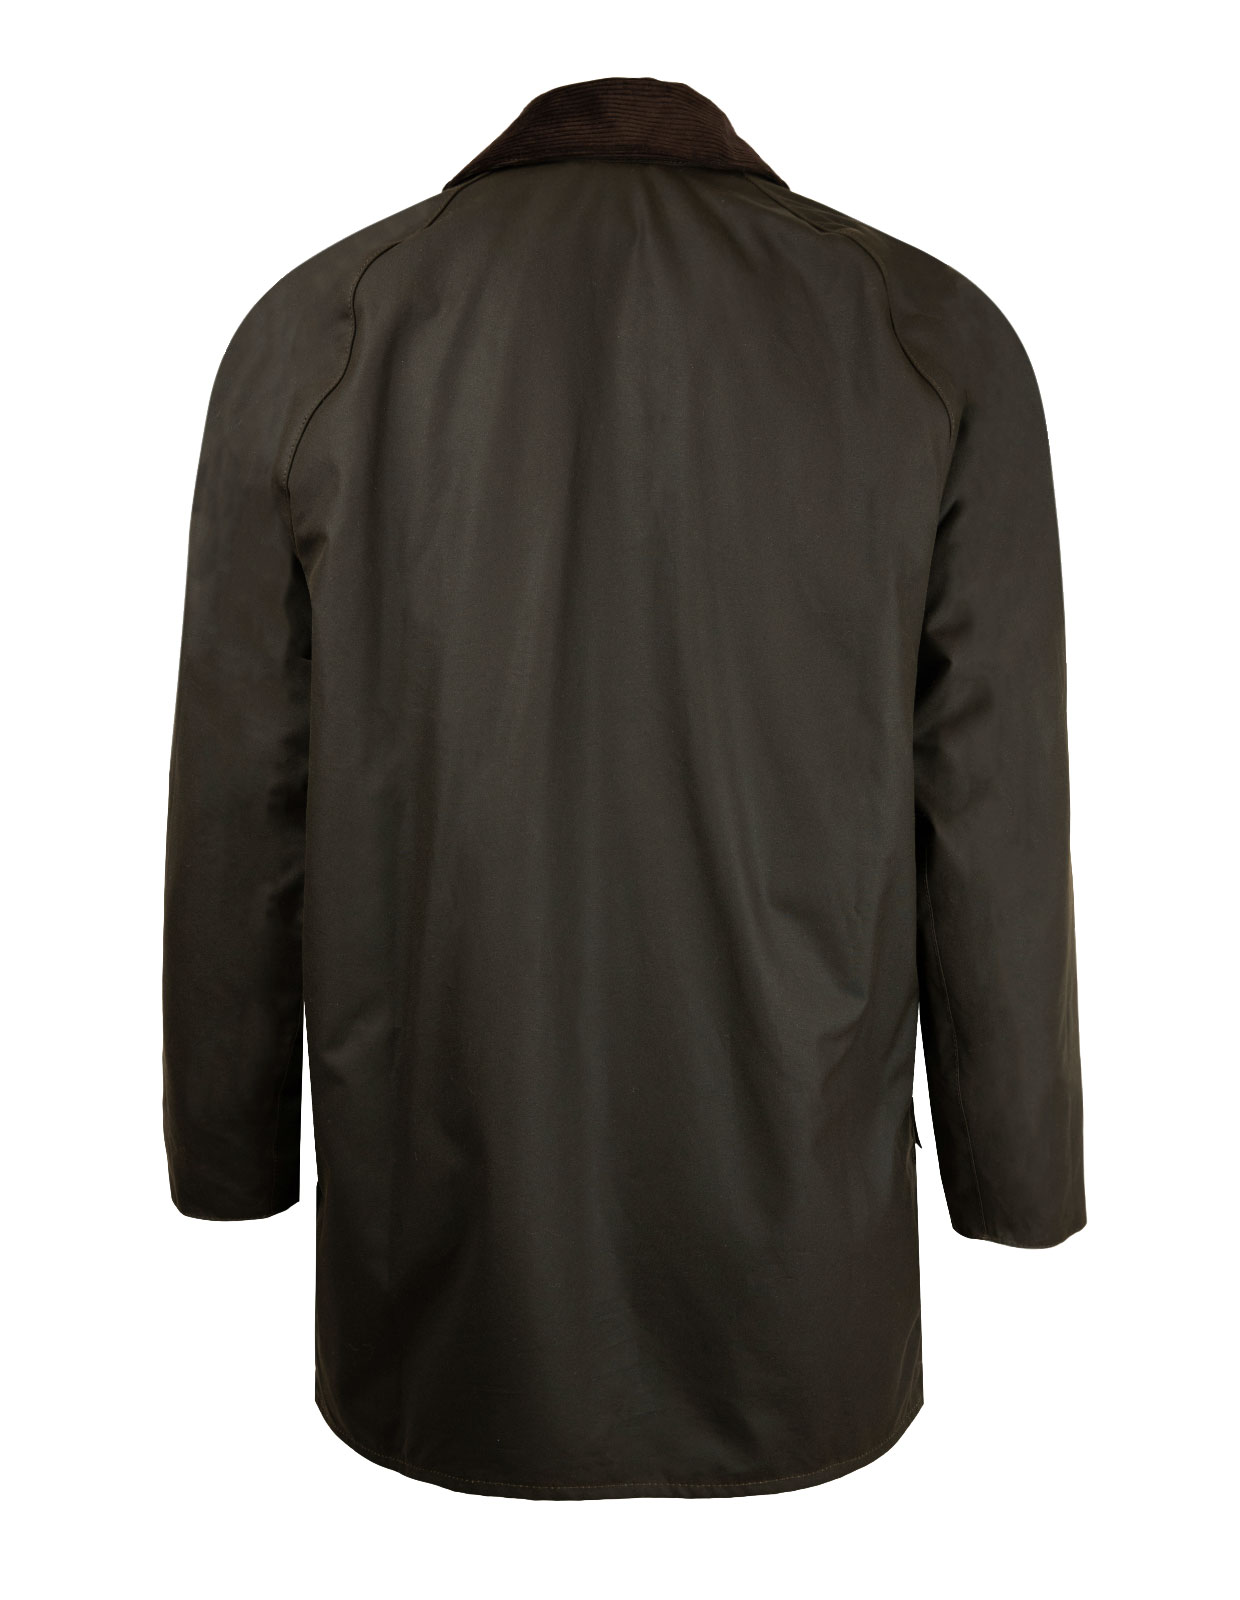 Classic Beaufort Jacket Olive Stl 50